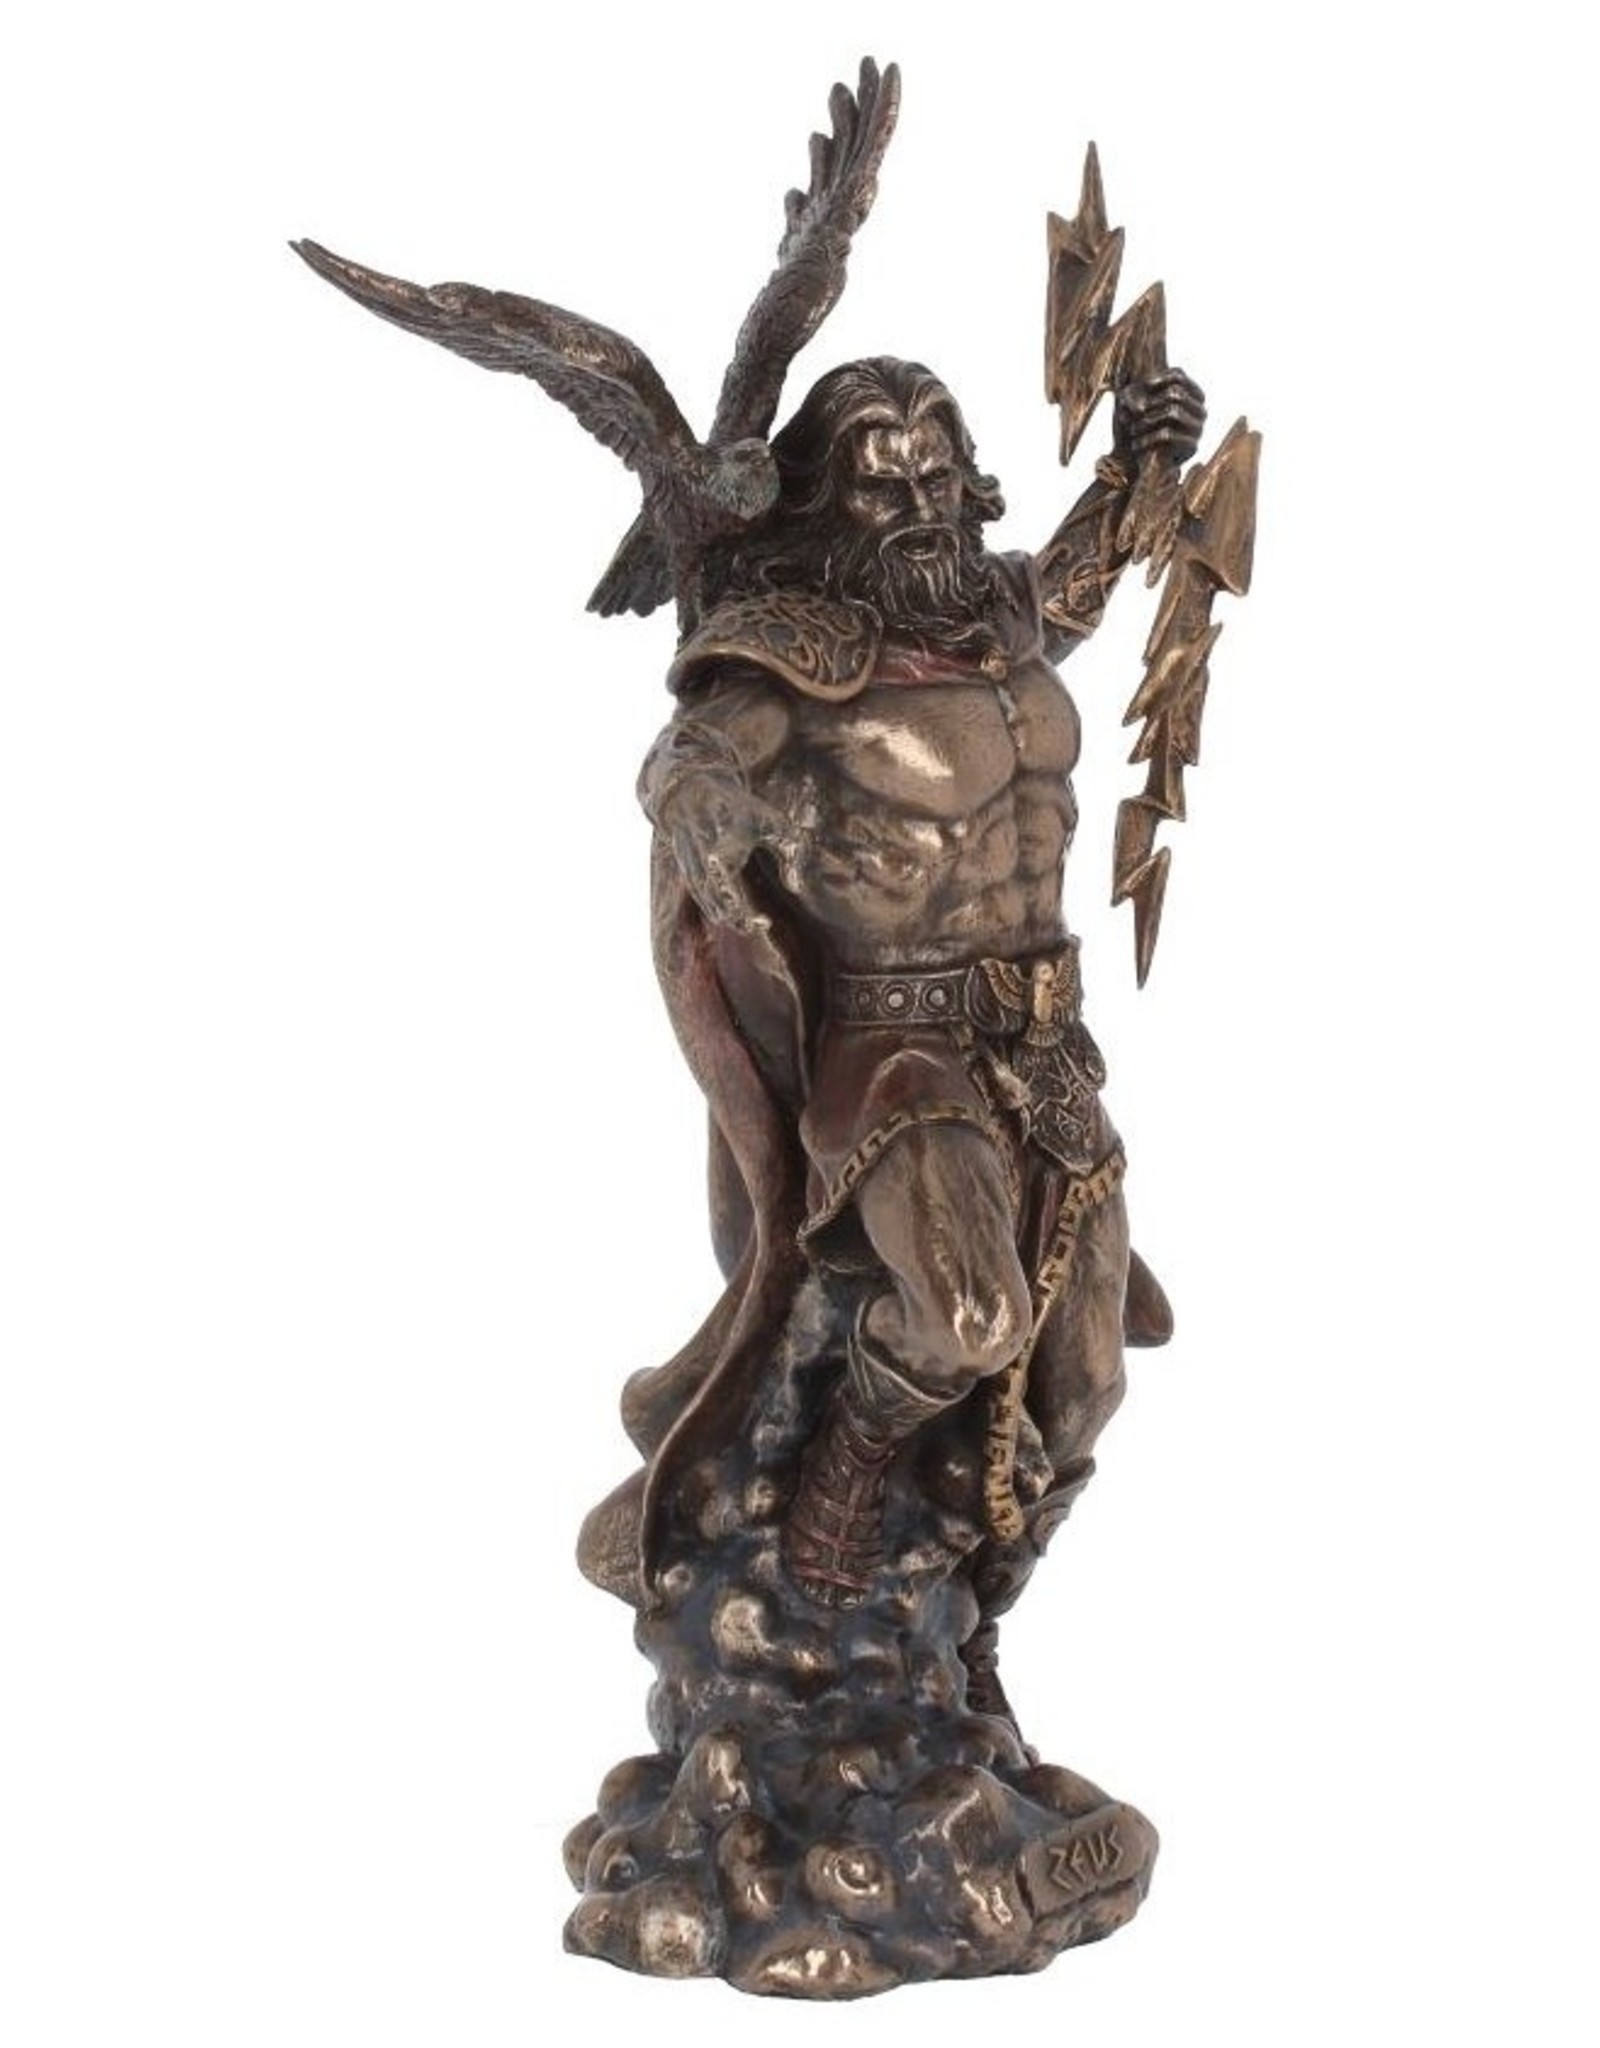 Veronese Design Giftware Figurines Collectables - Zeus bronzed figurine Large - 30cm